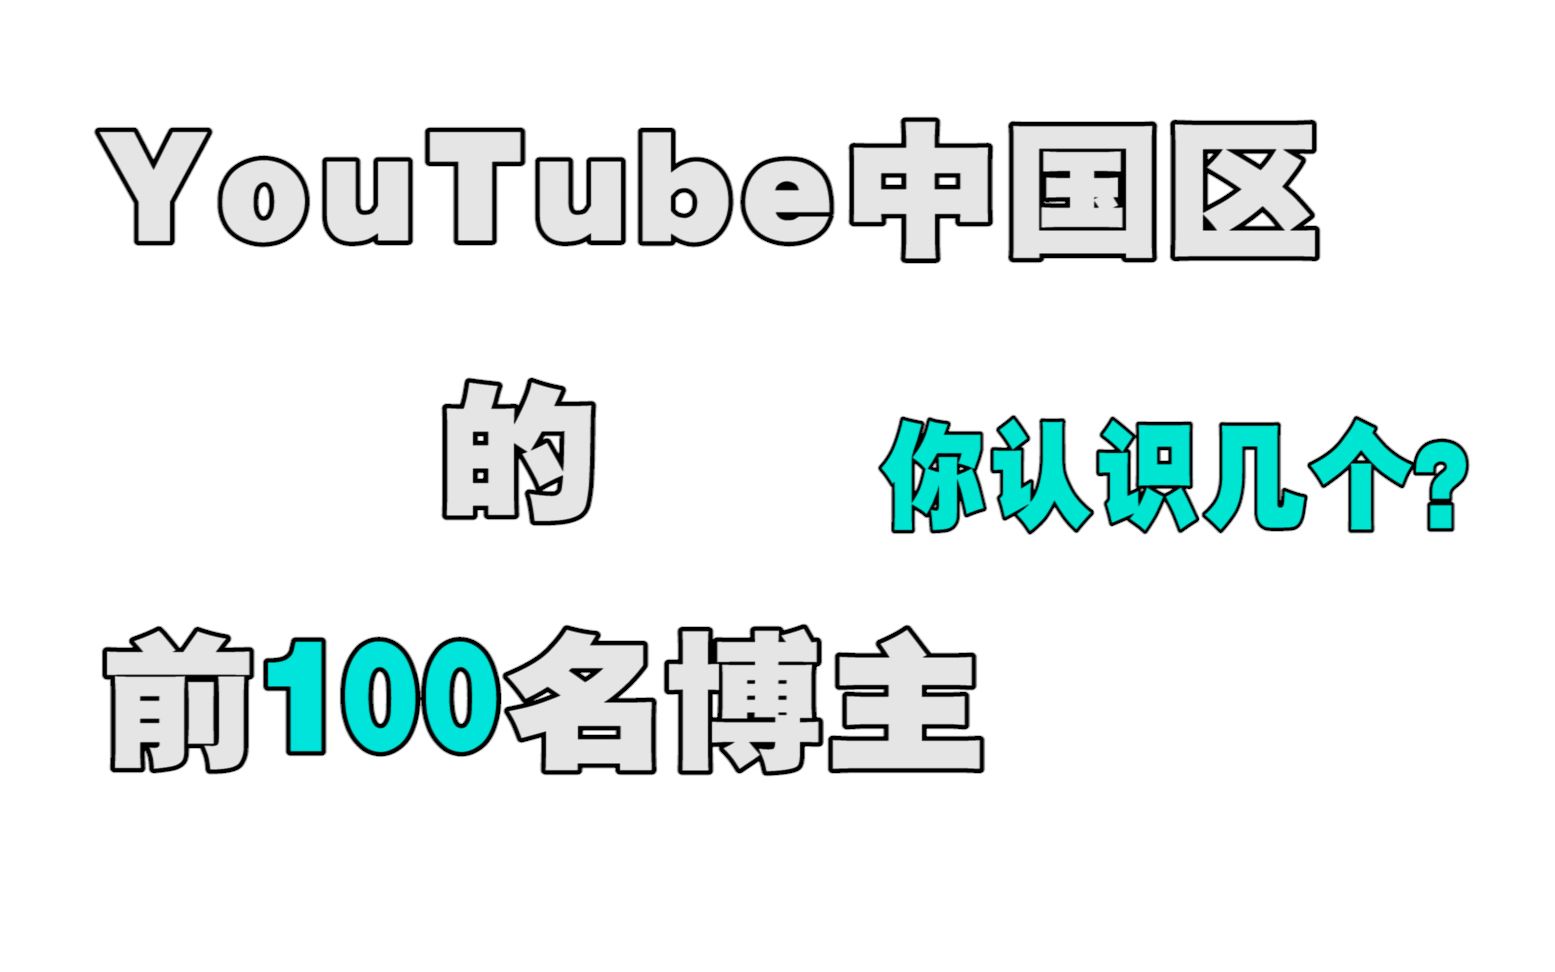 Youtube中国区 最强 博主 看看你认识几个 哔哩哔哩 つロ干杯 Bilibili